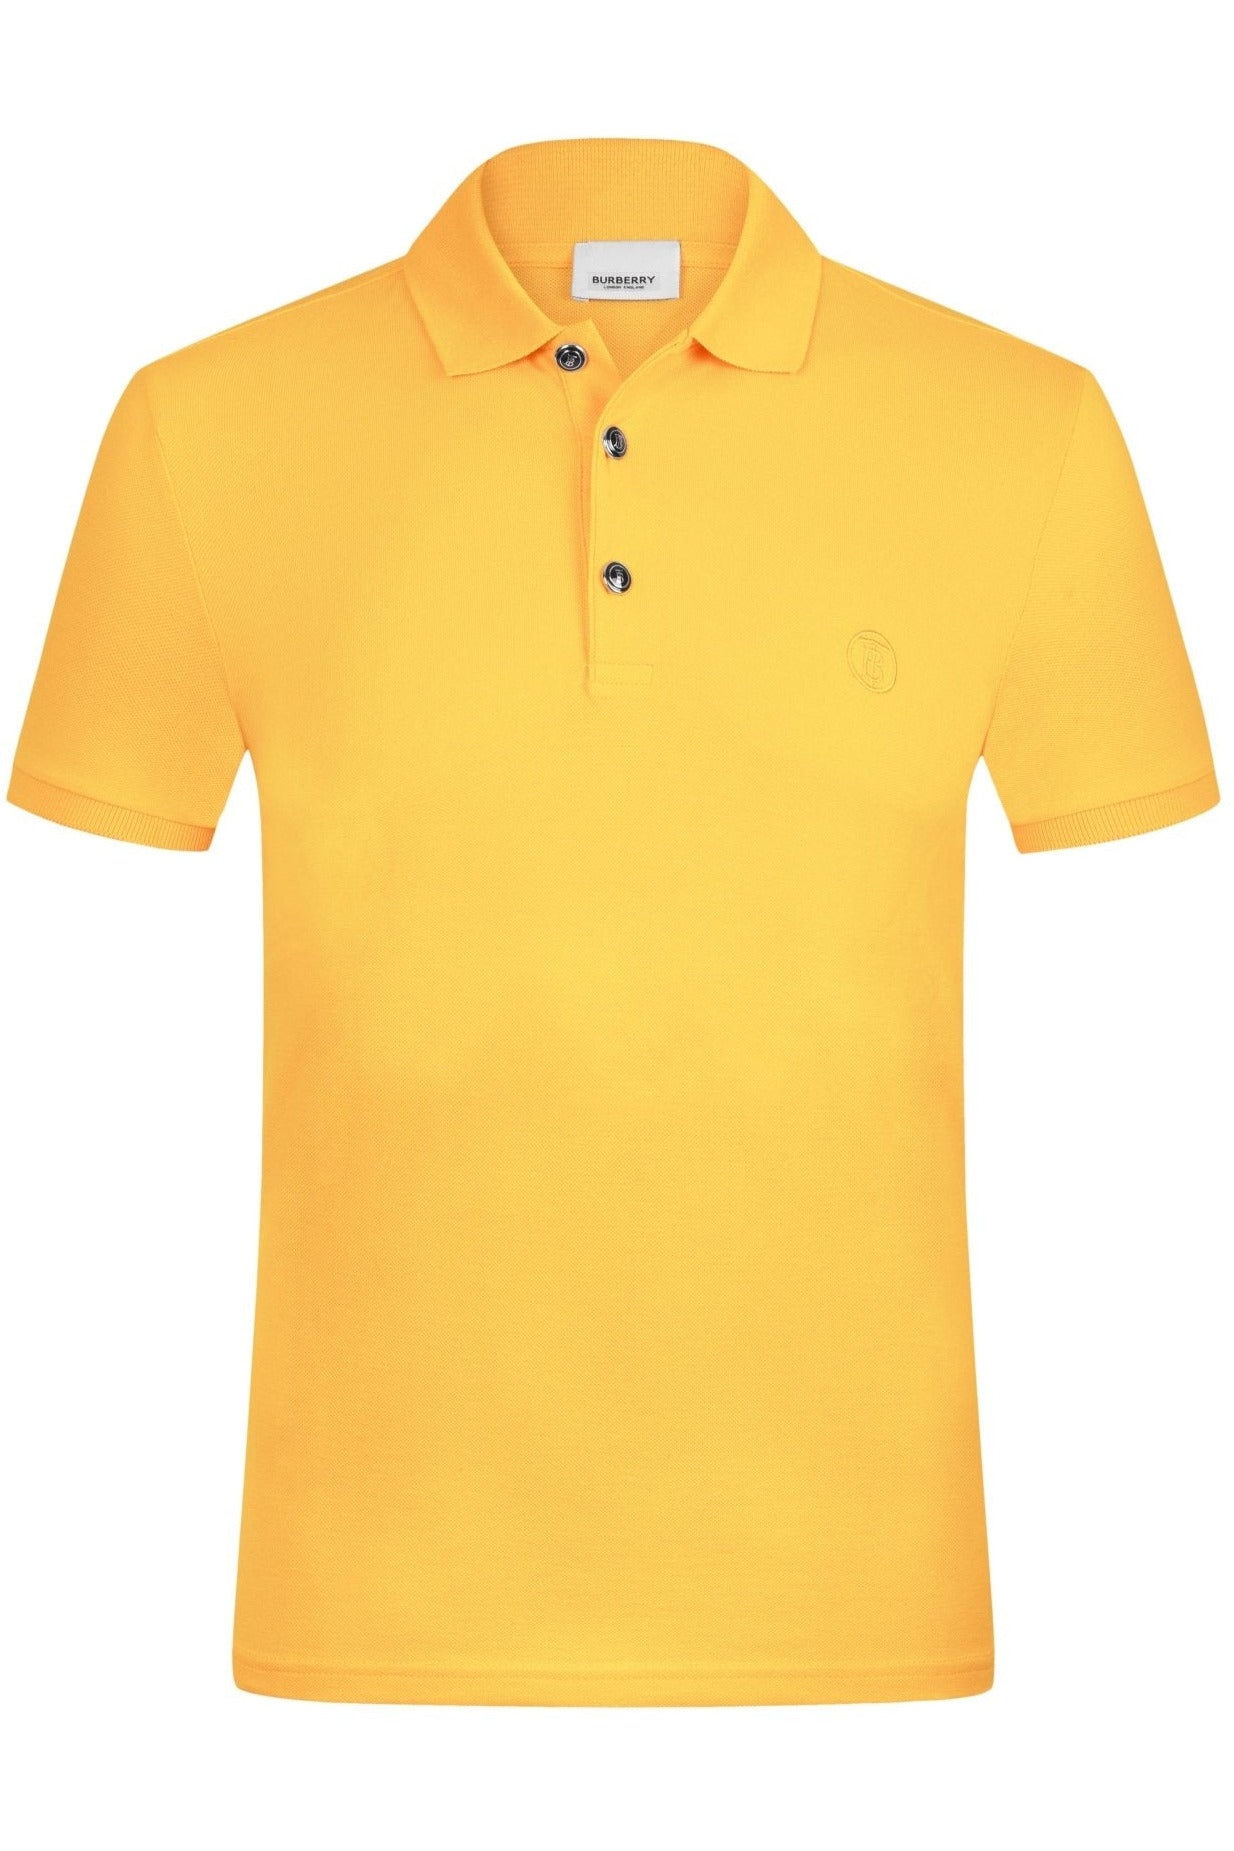 Burberry Polo Shirt - Giltenergy